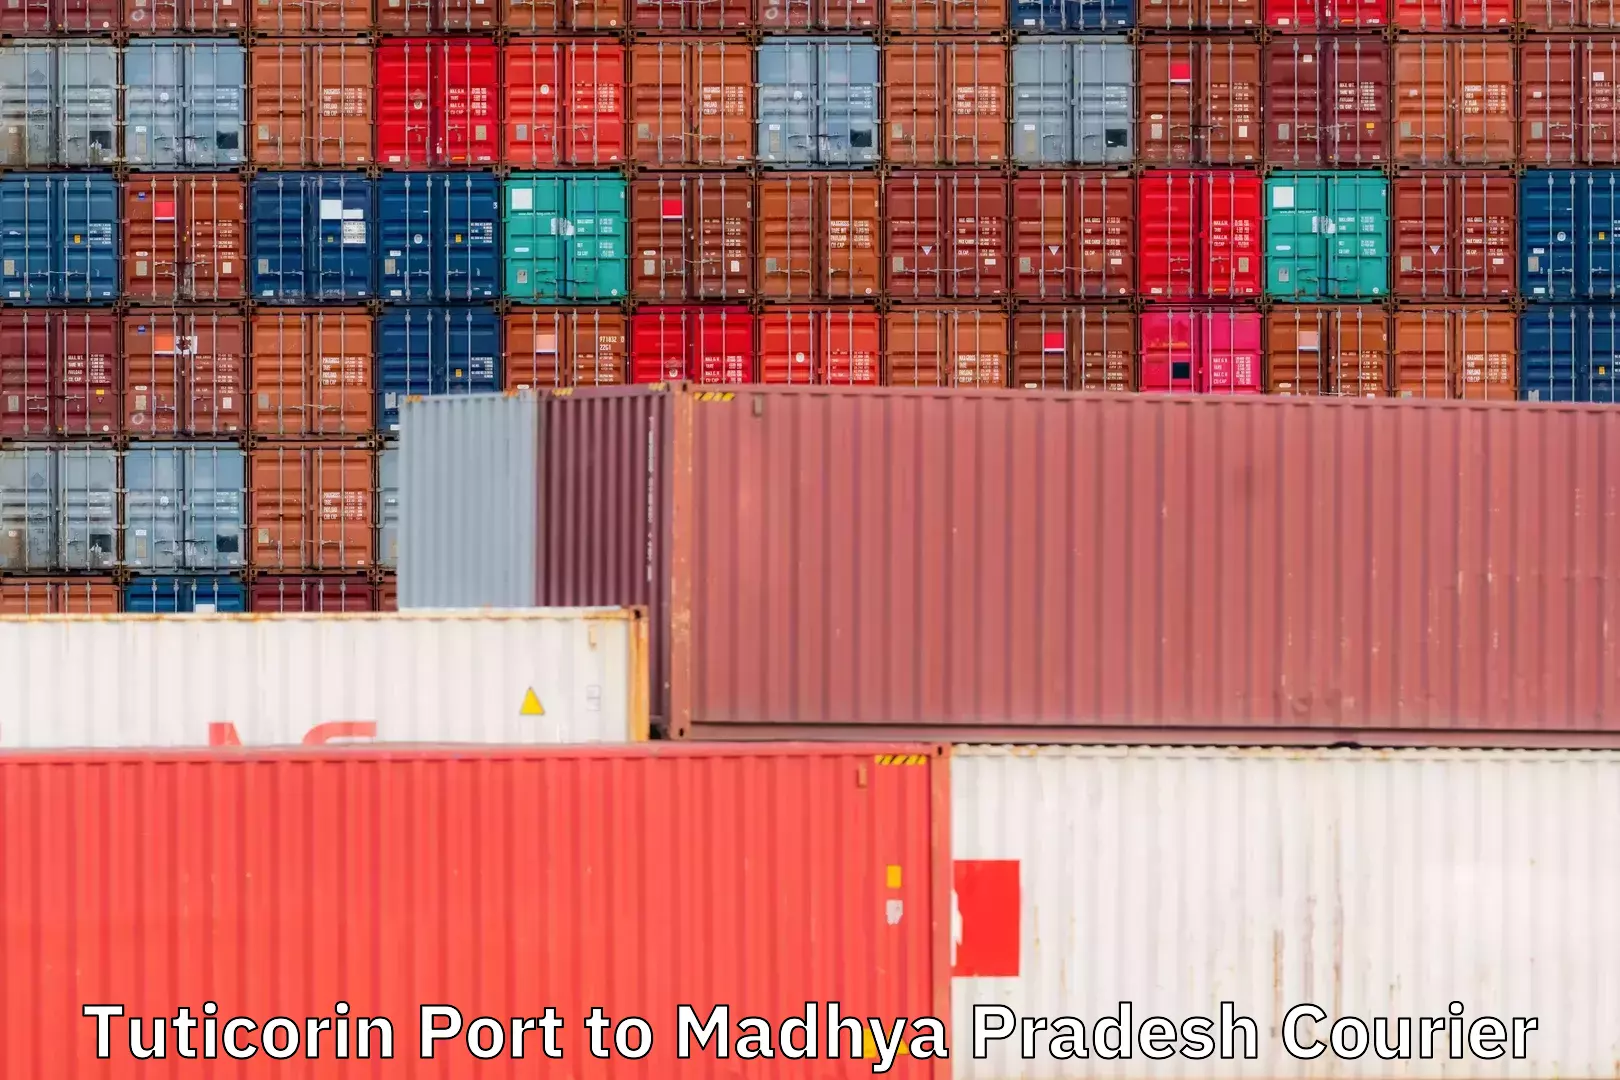 Professional courier handling Tuticorin Port to Madhya Pradesh